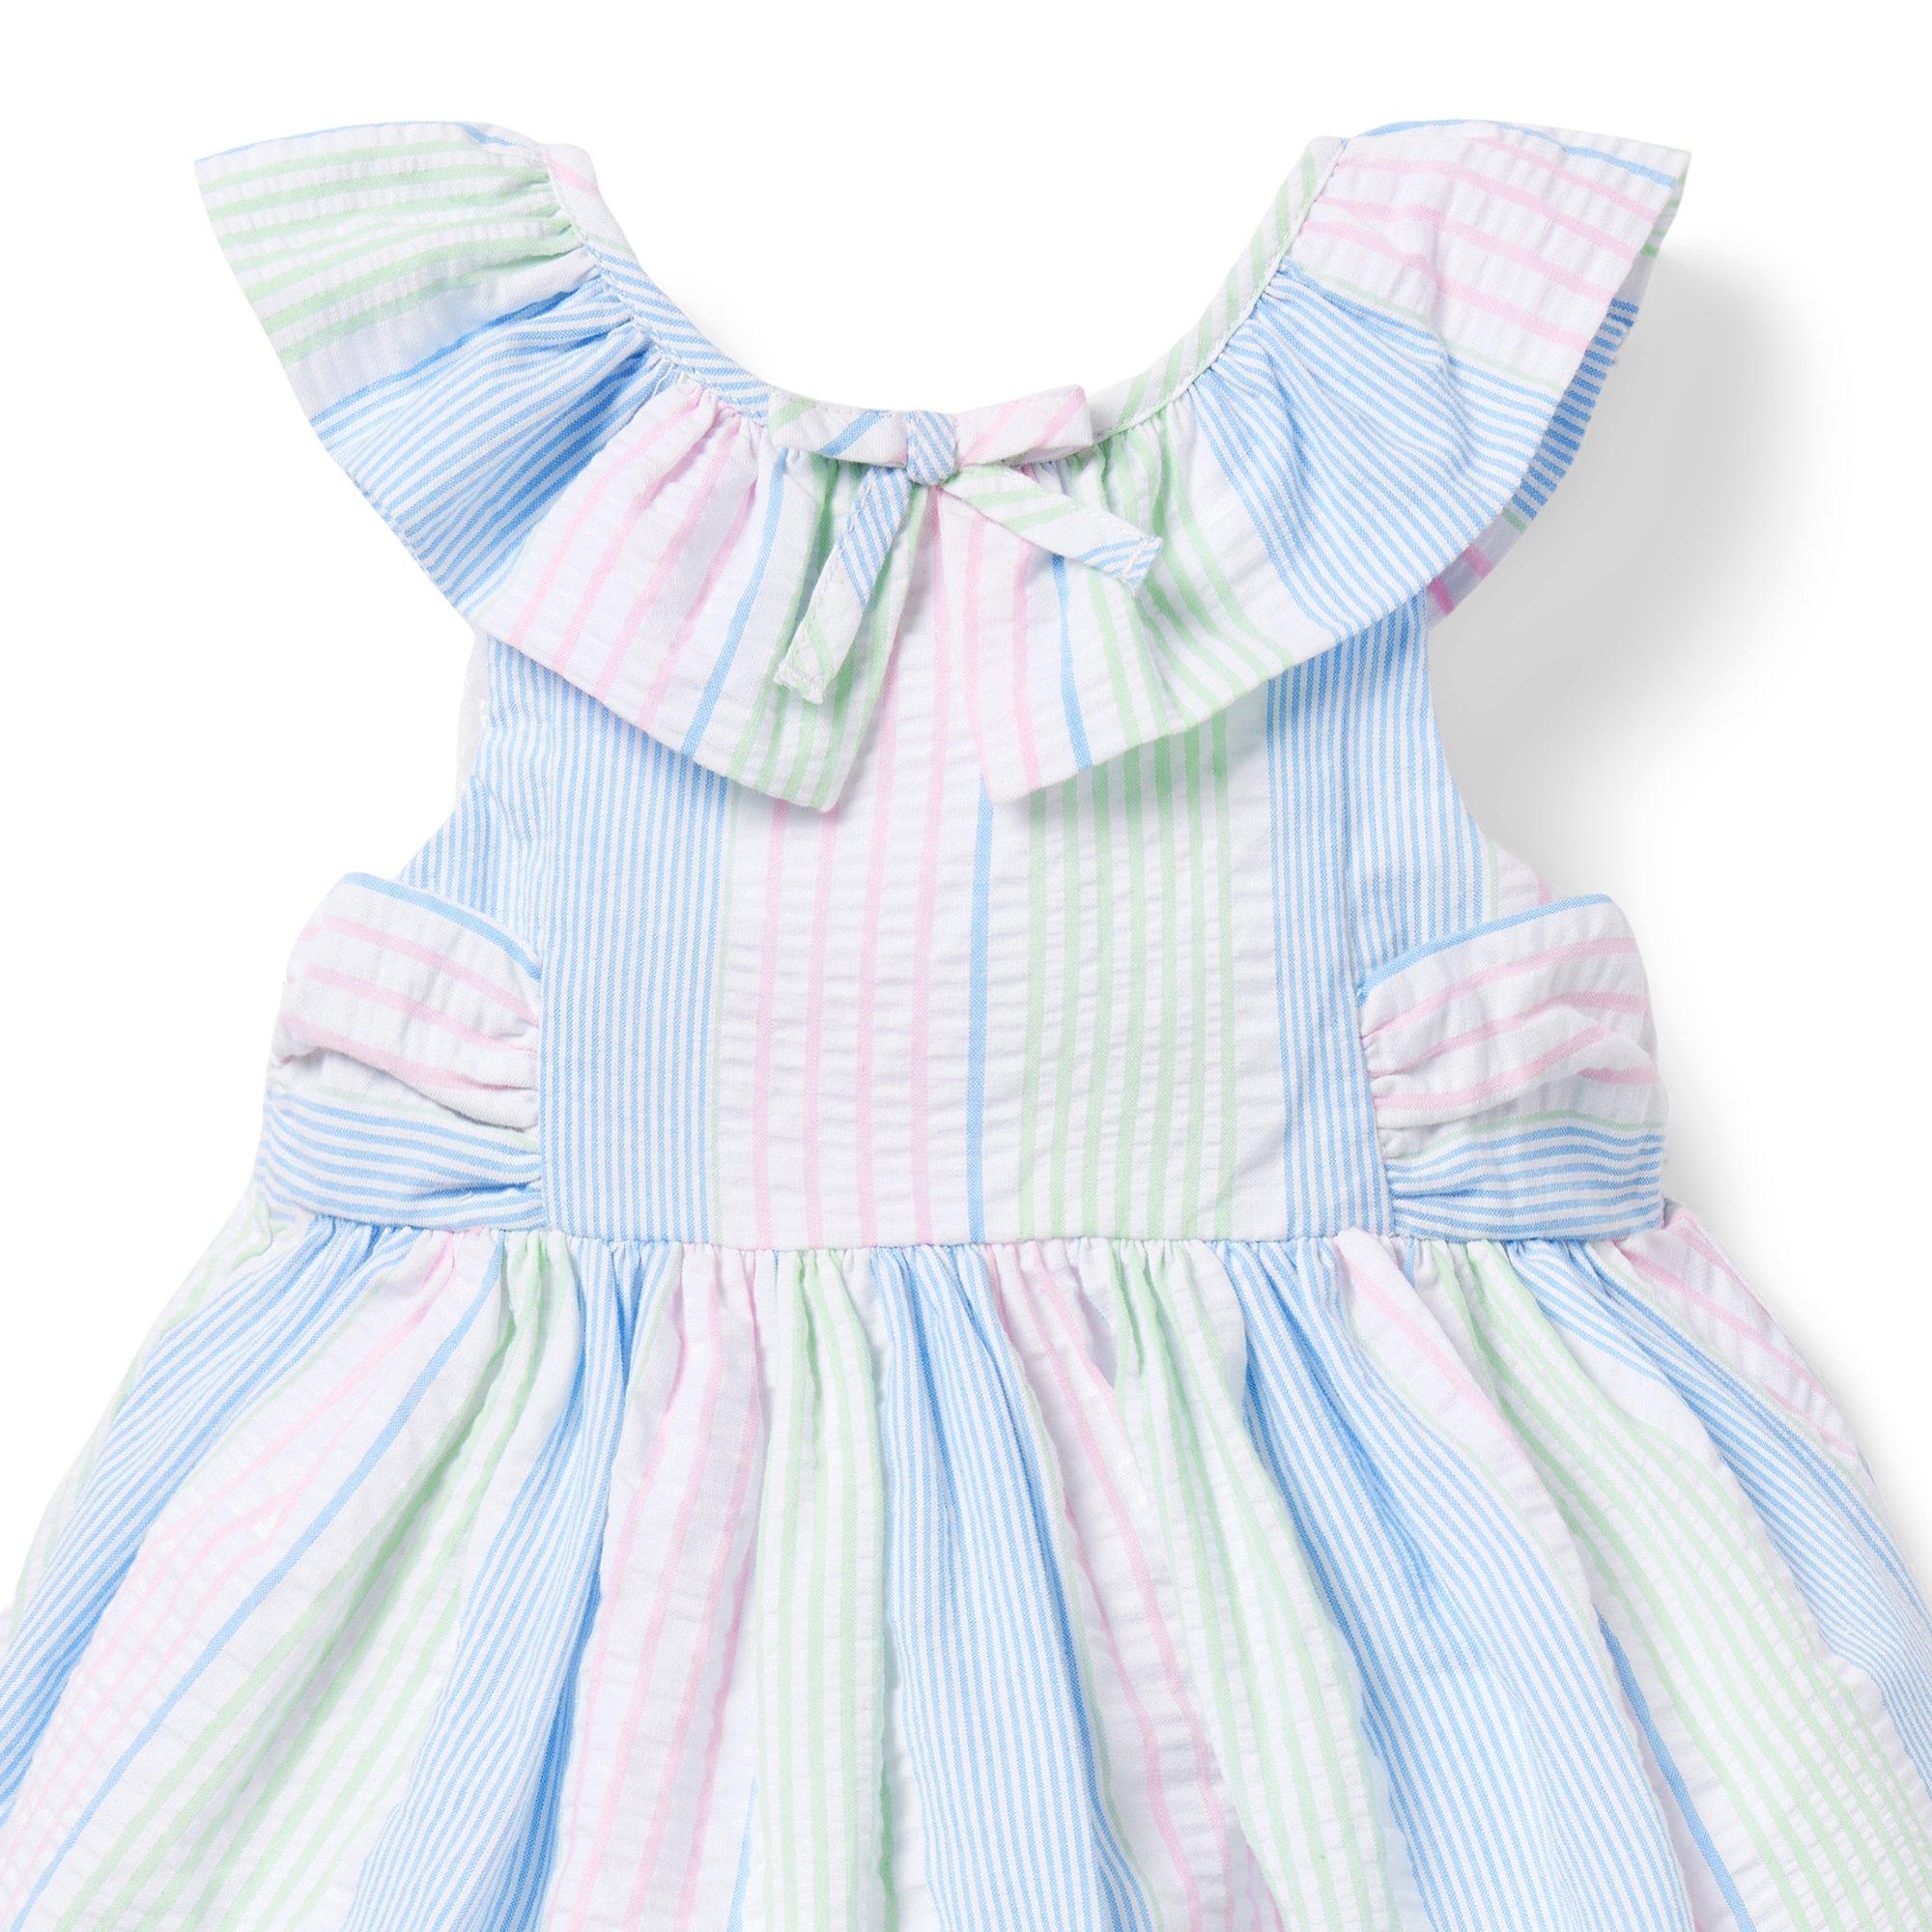 Newborn Light Blue Stripe Baby Striped Seersucker Bodysuit by